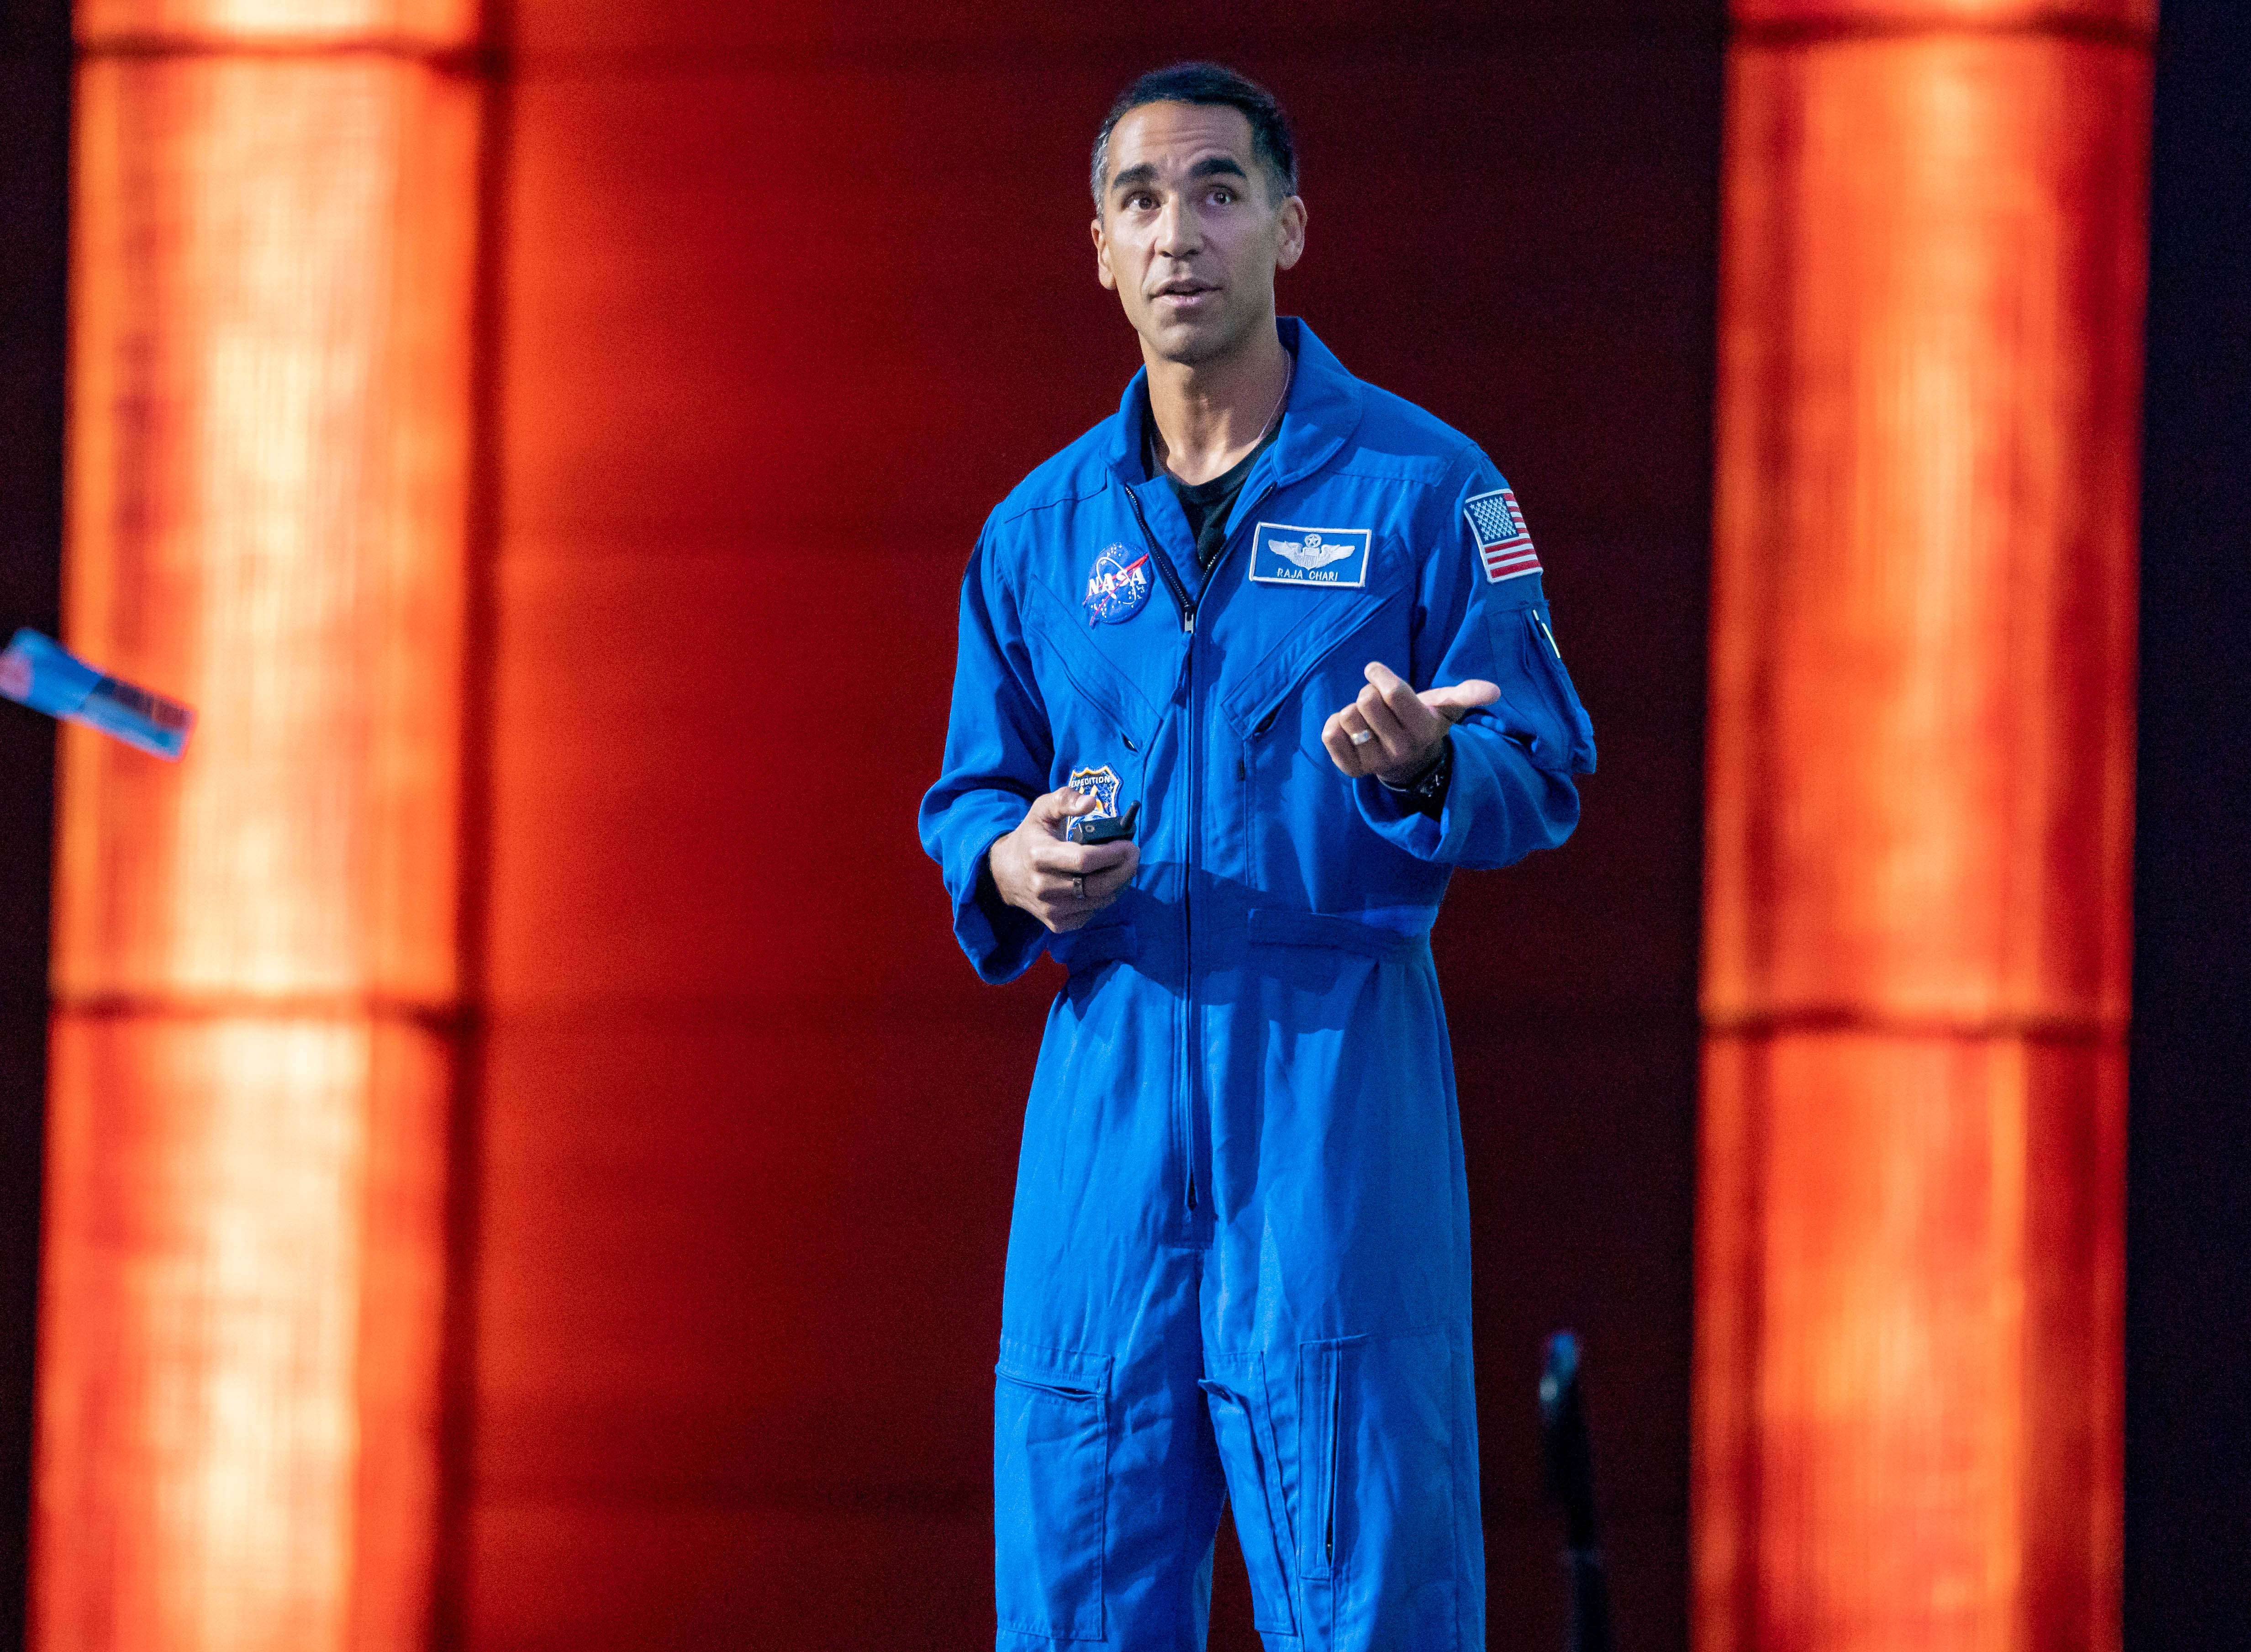 Iowa astronaut Raja Chari promotes STEM education in Des Moines